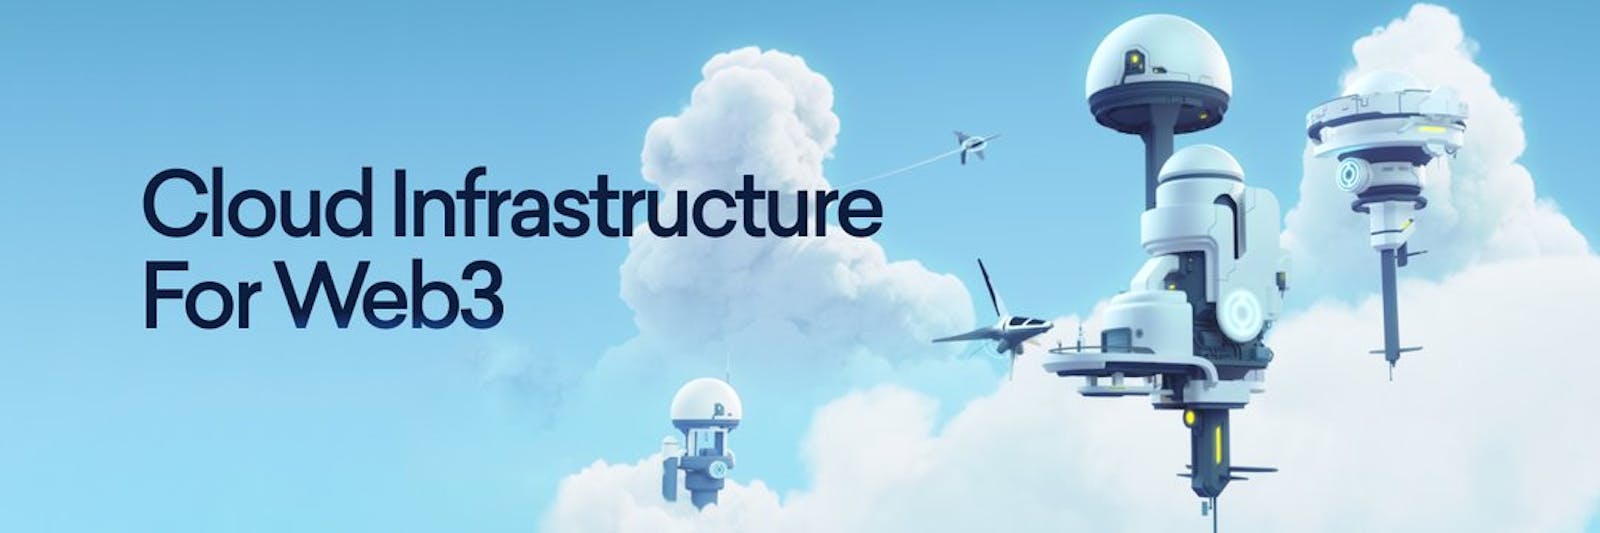 CUDOSIntercloud: Cloud Infrastructure for Web3